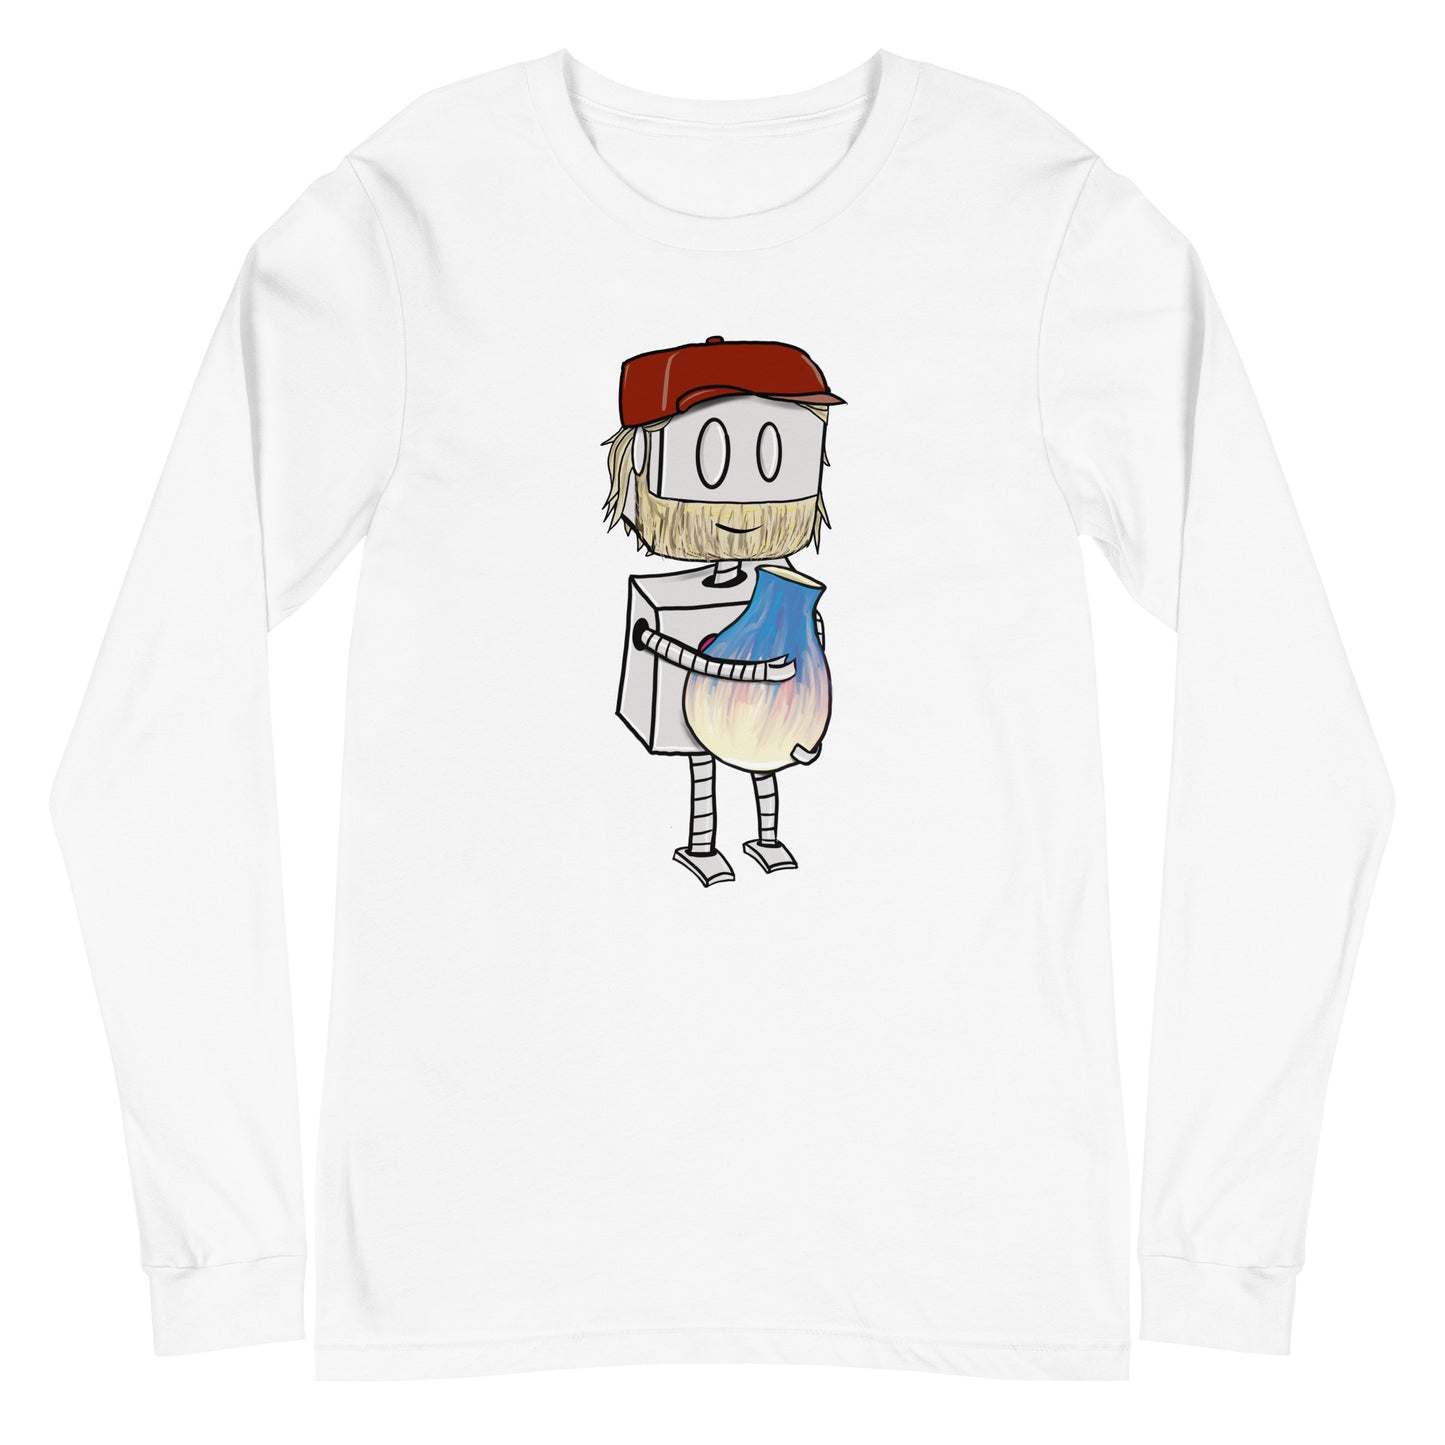 "Adorable Potter Robot" Long-Sleeve Shirt (Dan's Version)